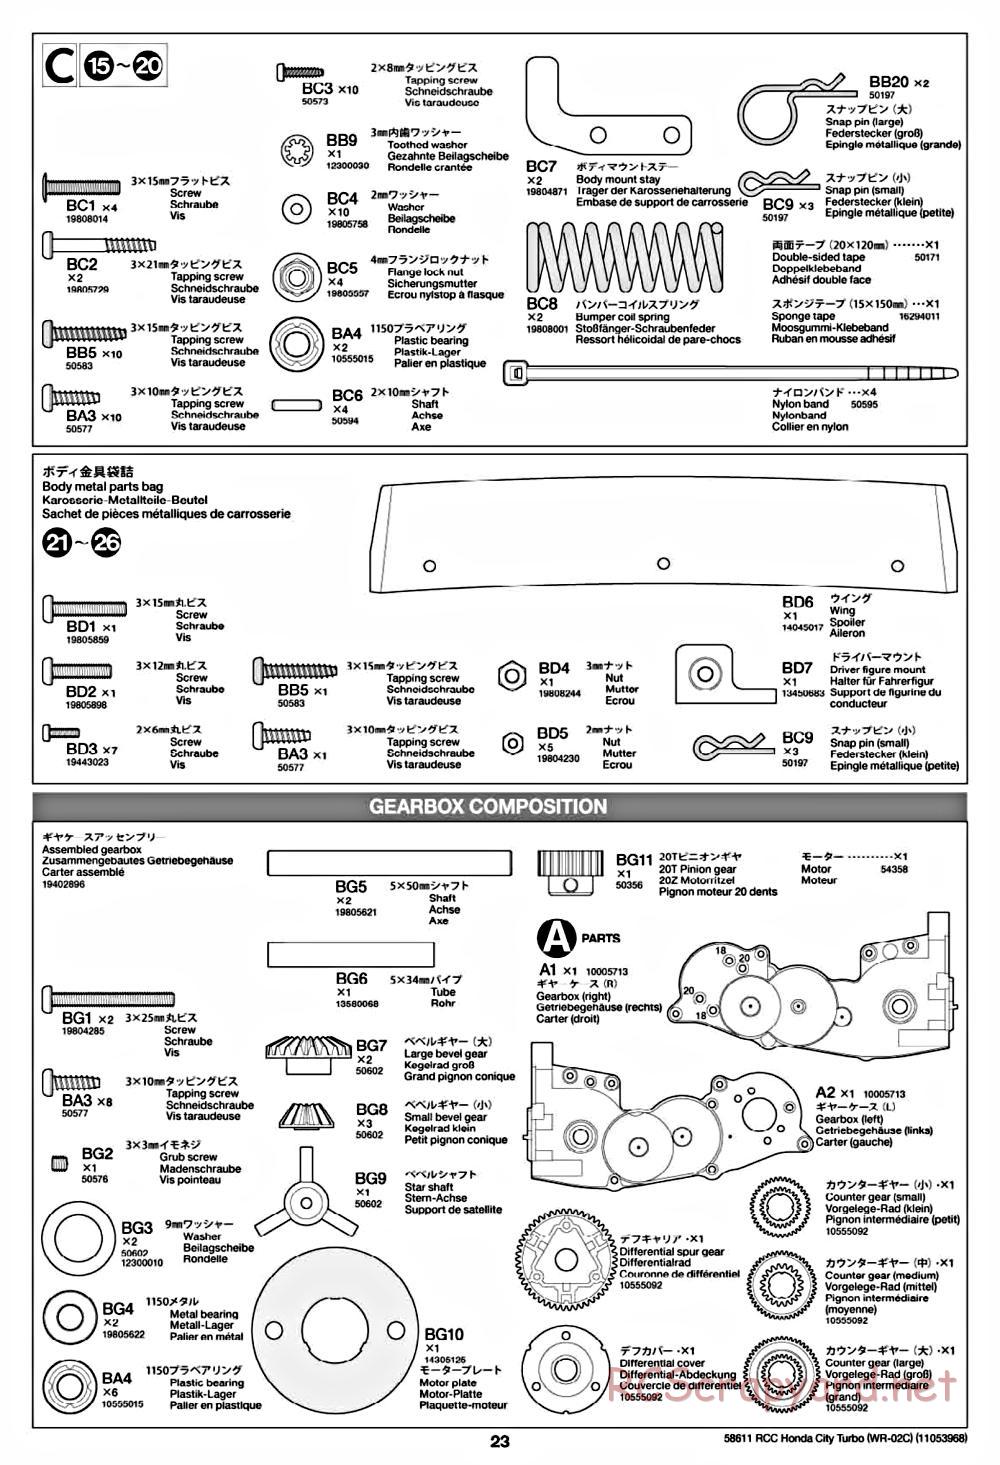 Tamiya - WR-02C Chassis - Manual - Page 23